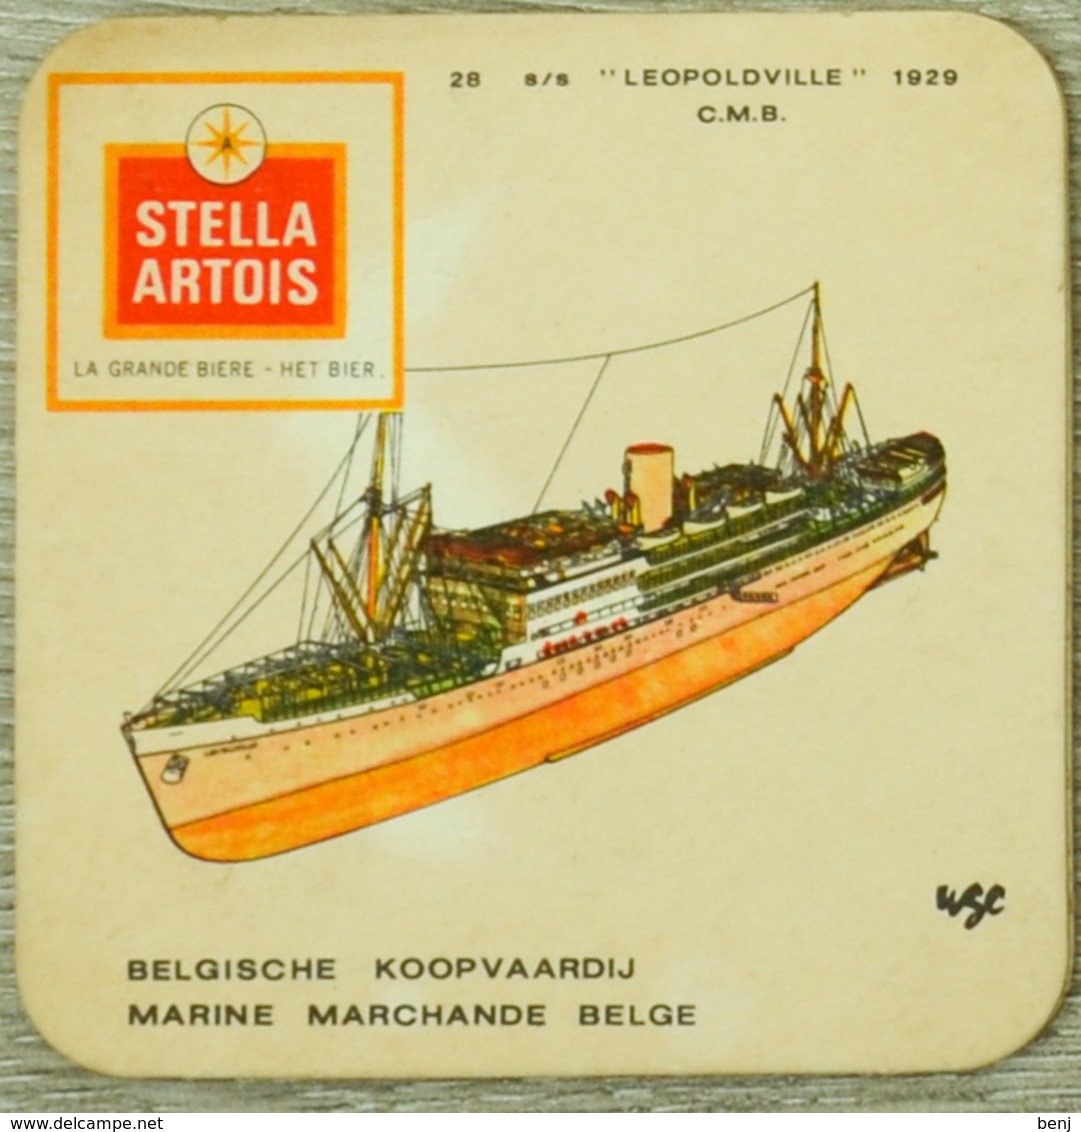 Sous-bock STELLA ARTOIS Marine Marchande Belgique Belgie Koopvaardij 28 Leopoldville 1929 CMB Bateau (CX) - Bierviltjes